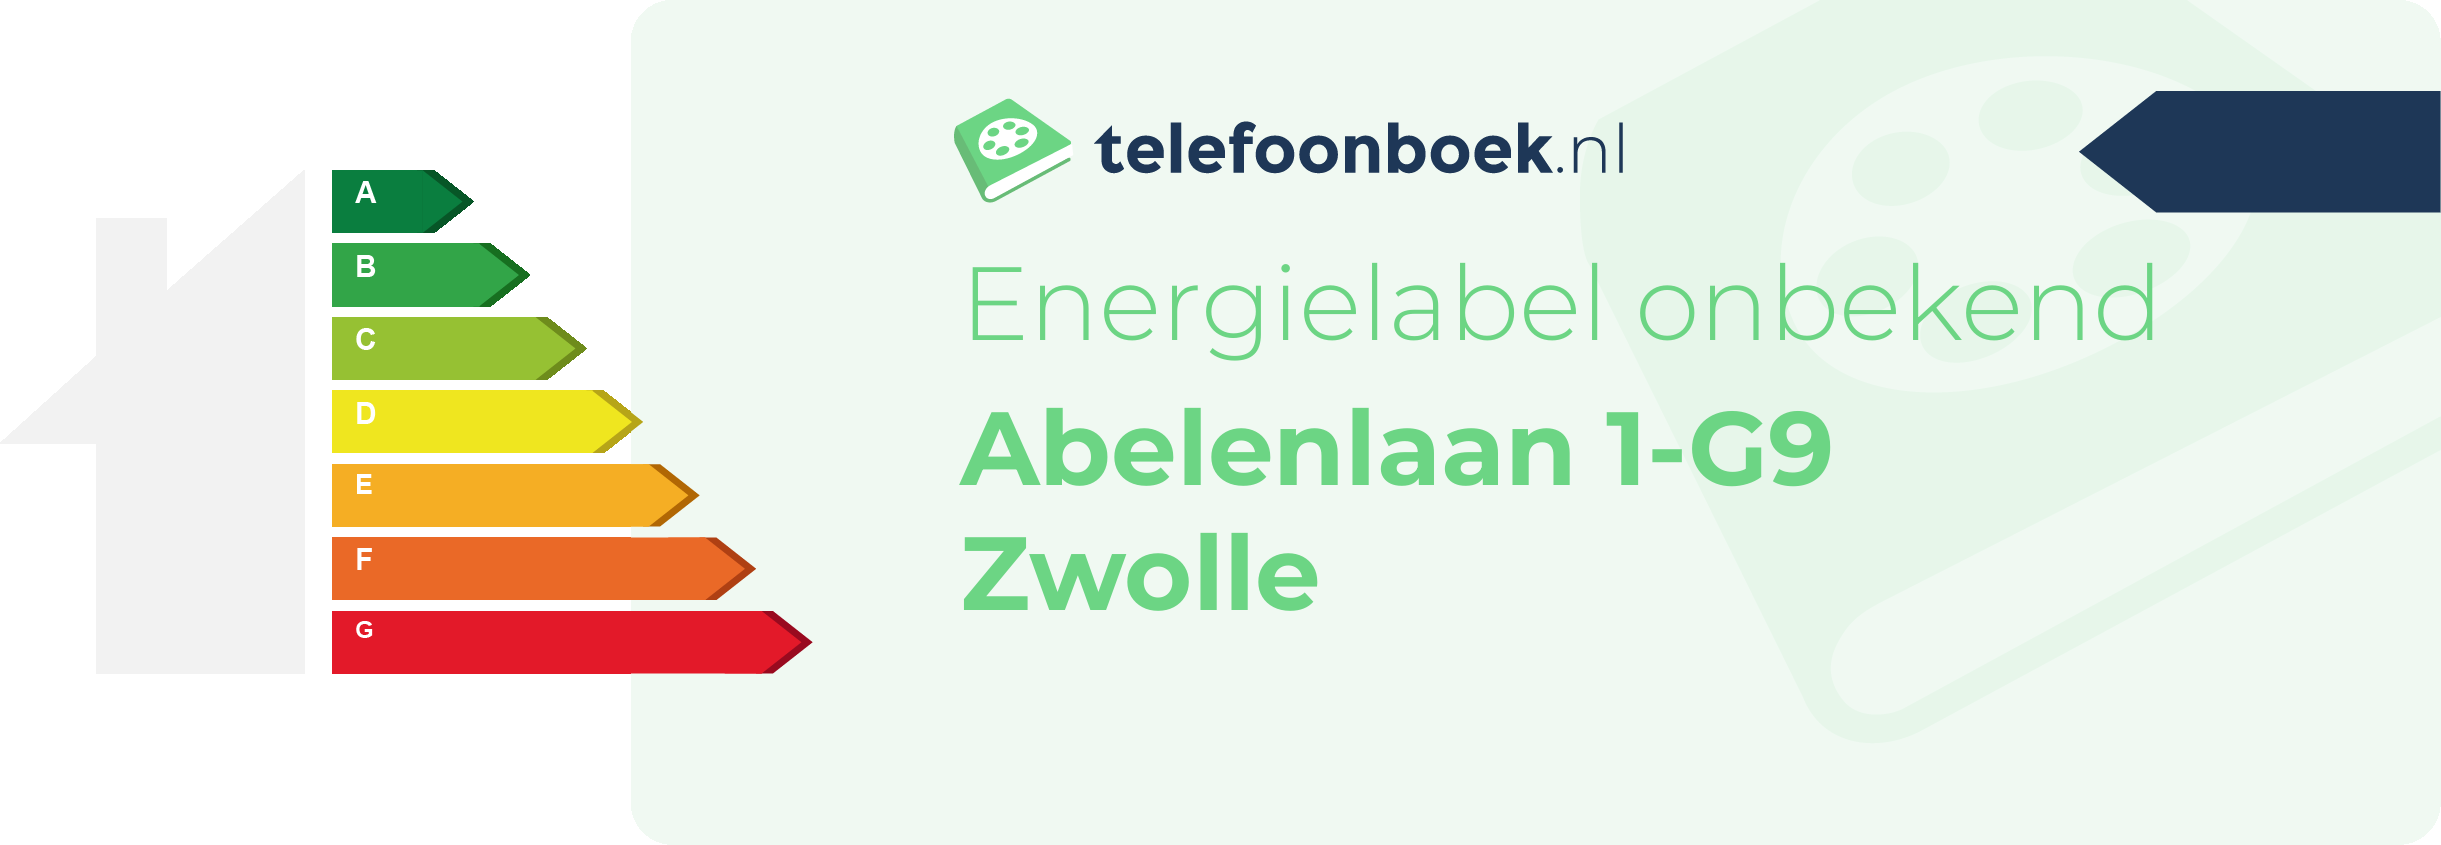 Energielabel Abelenlaan 1-G9 Zwolle